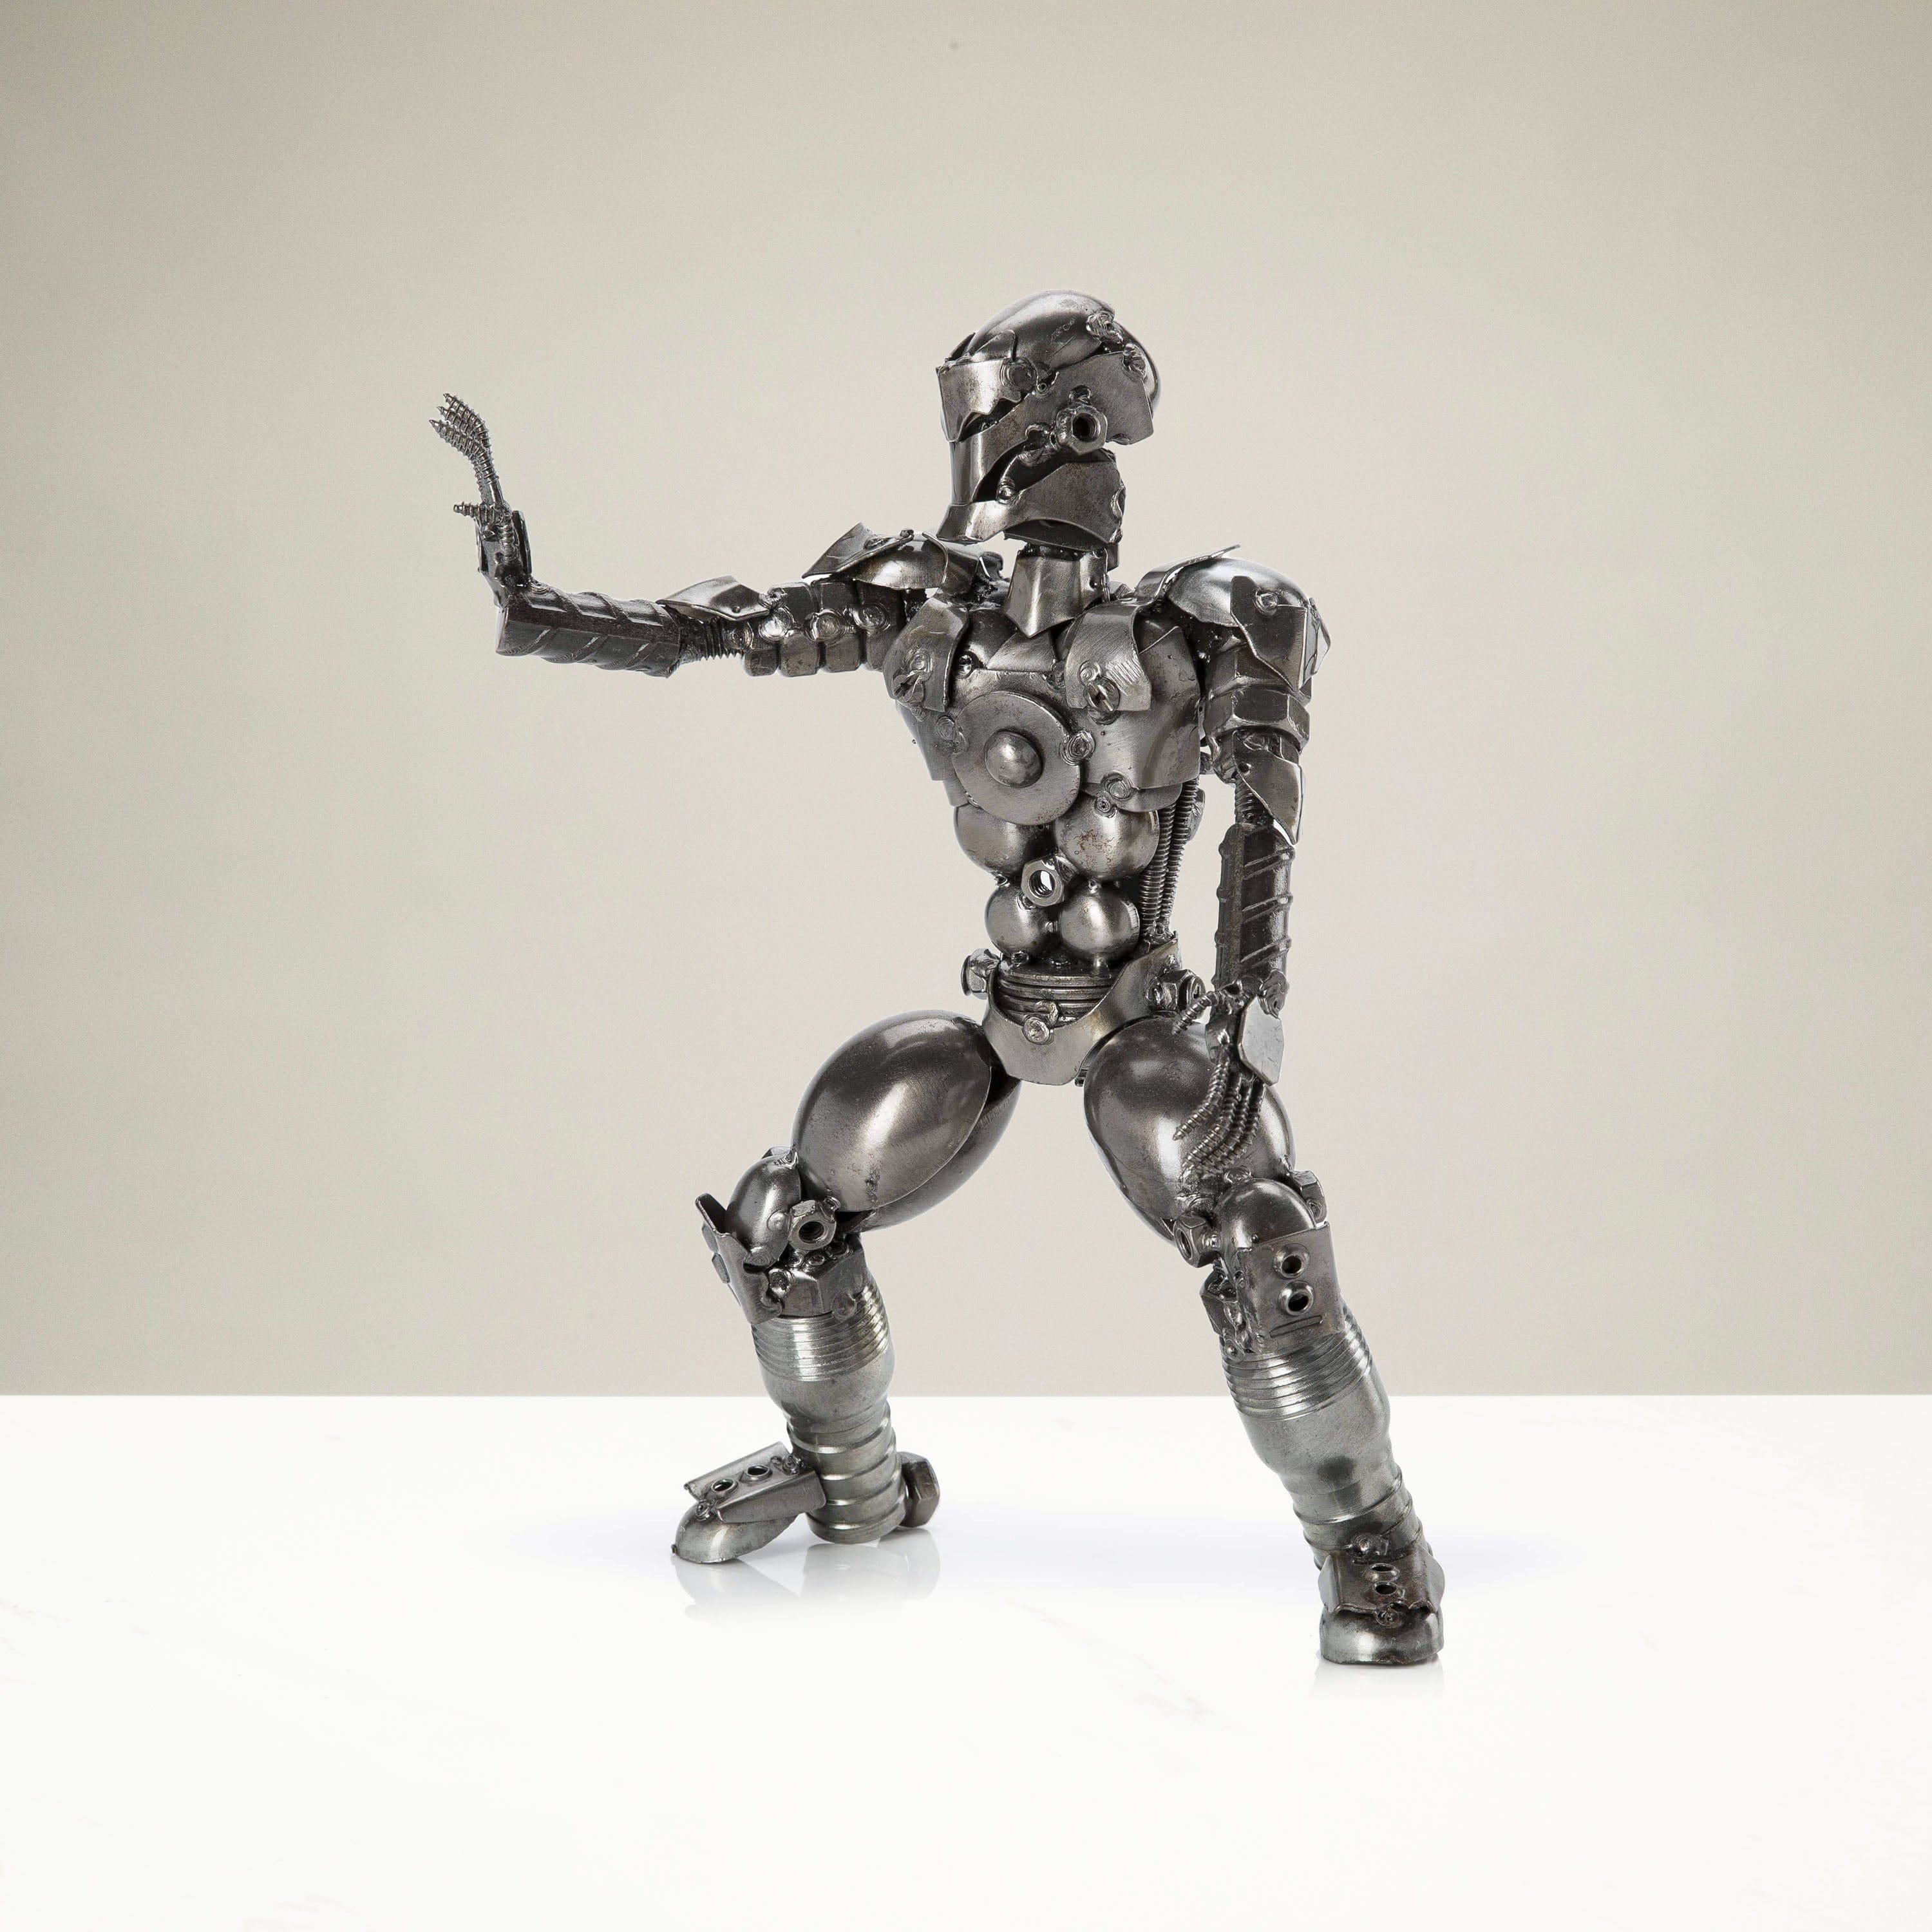 Kalifano Recycled Metal Art Iron Man Inspired Recycled Metal Sculpture RMS-700IMA-N